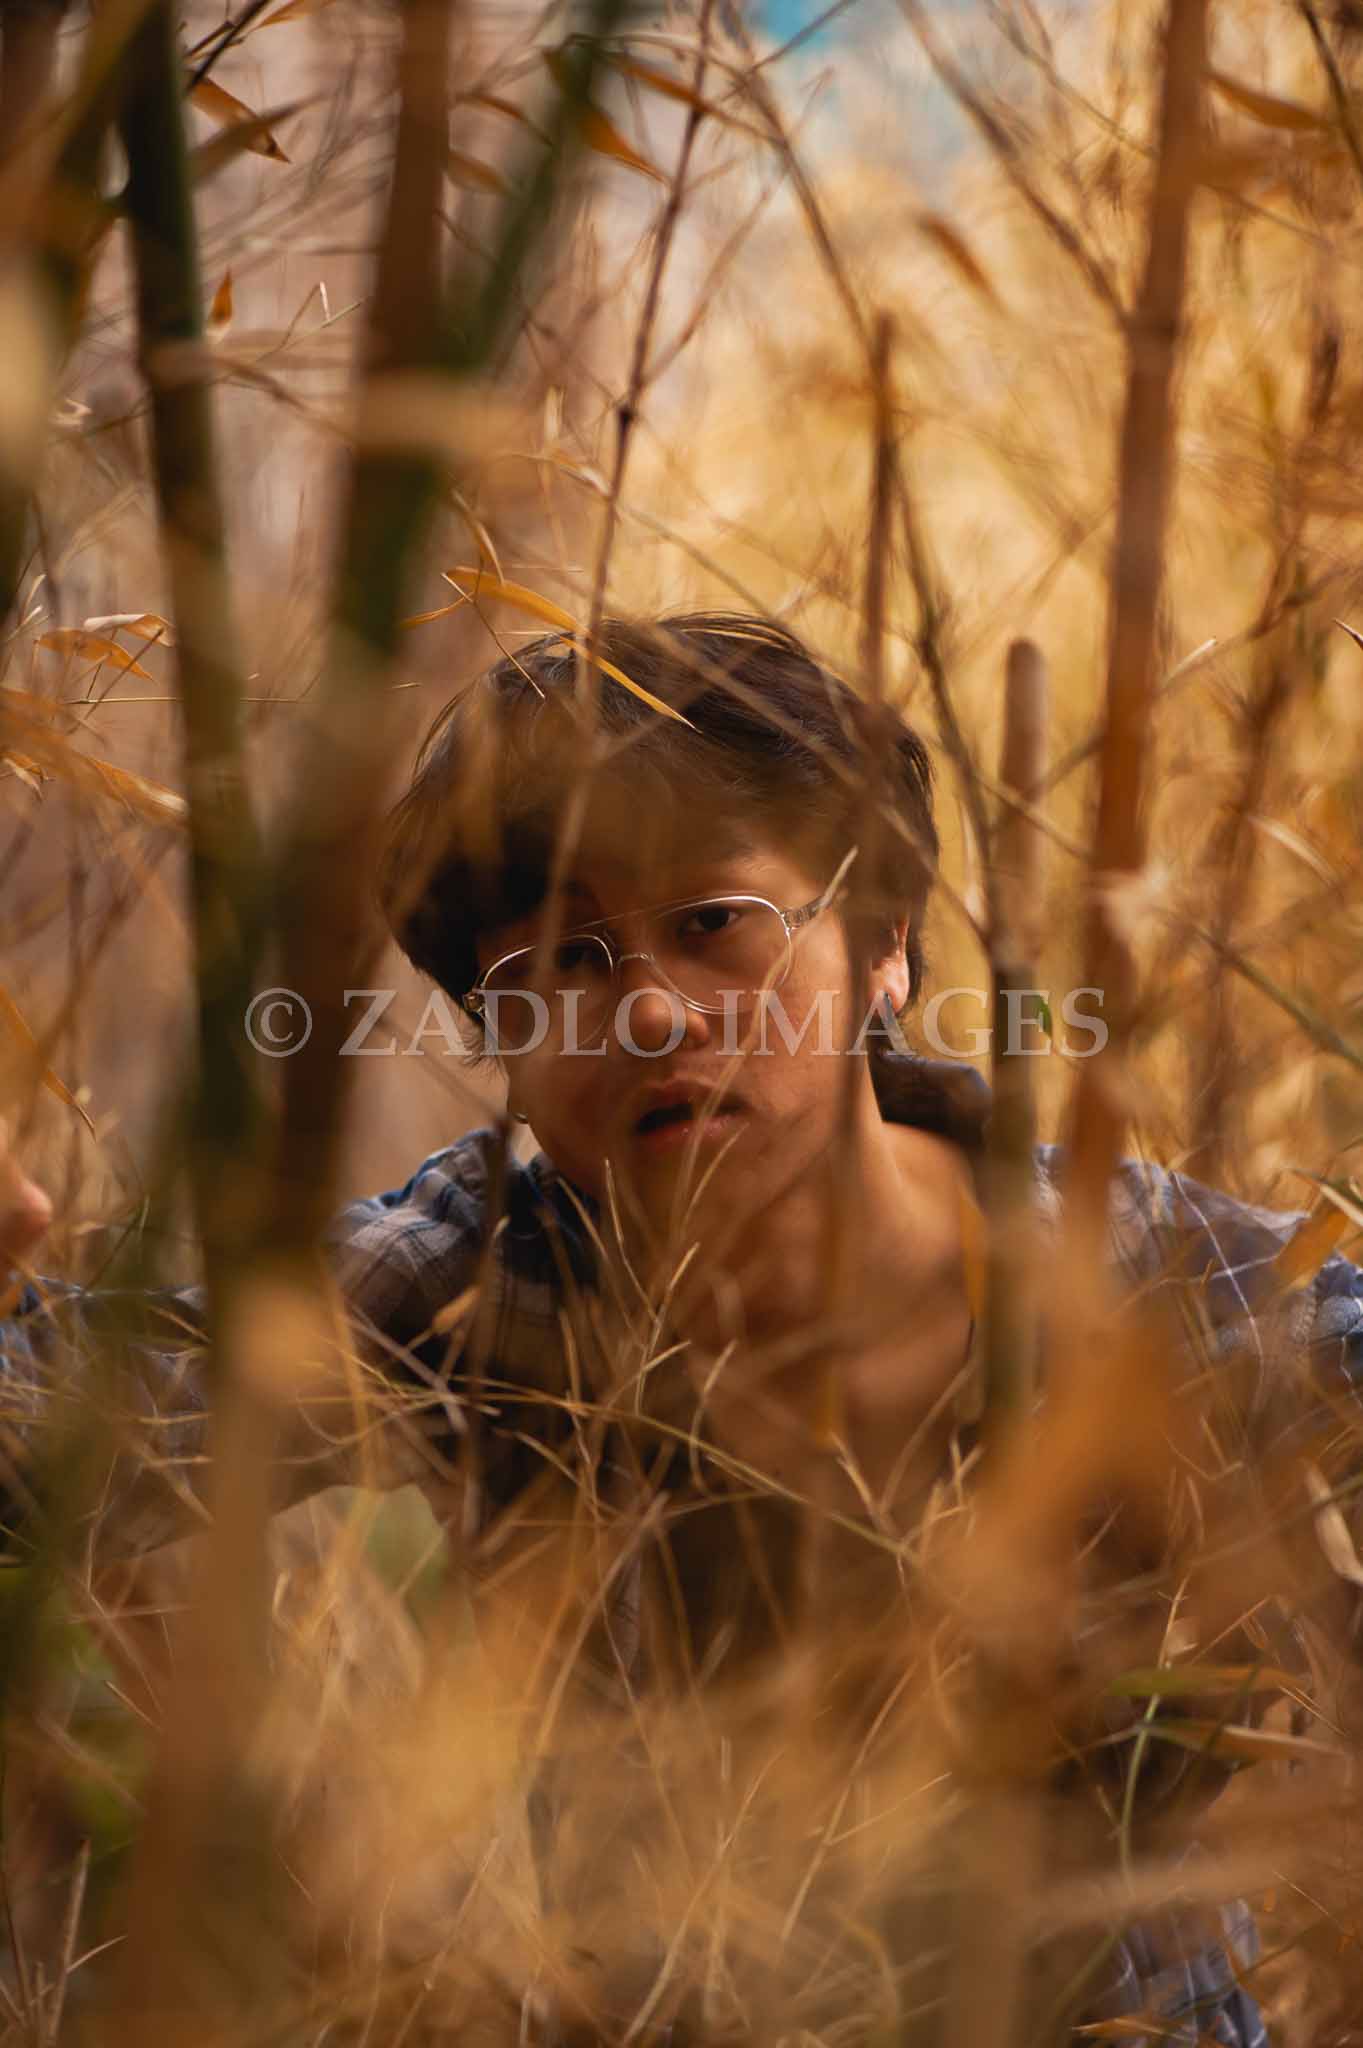 Teen boy looking into the camera through a field.